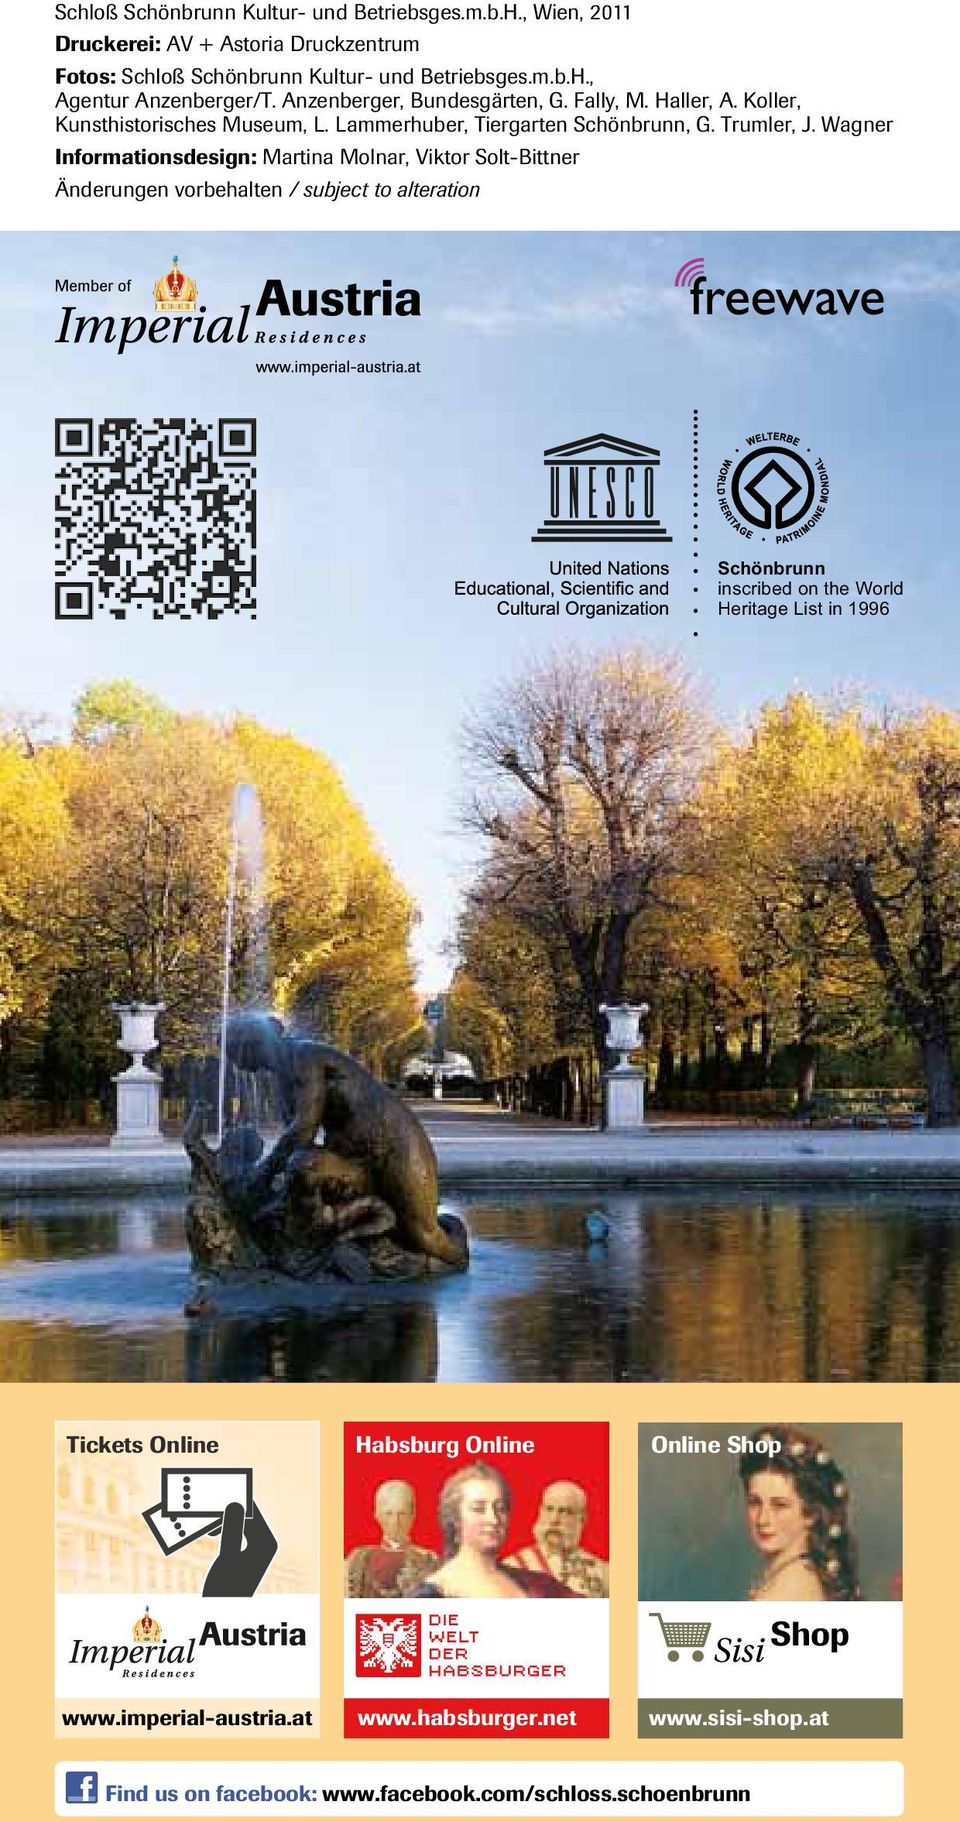 Wagner Informationsdesign: Martina Molnar, Viktor Solt-Bittner Änderungen vorbehalten / subject to alteration Schönbrunn inscribed on the World Heritage List in